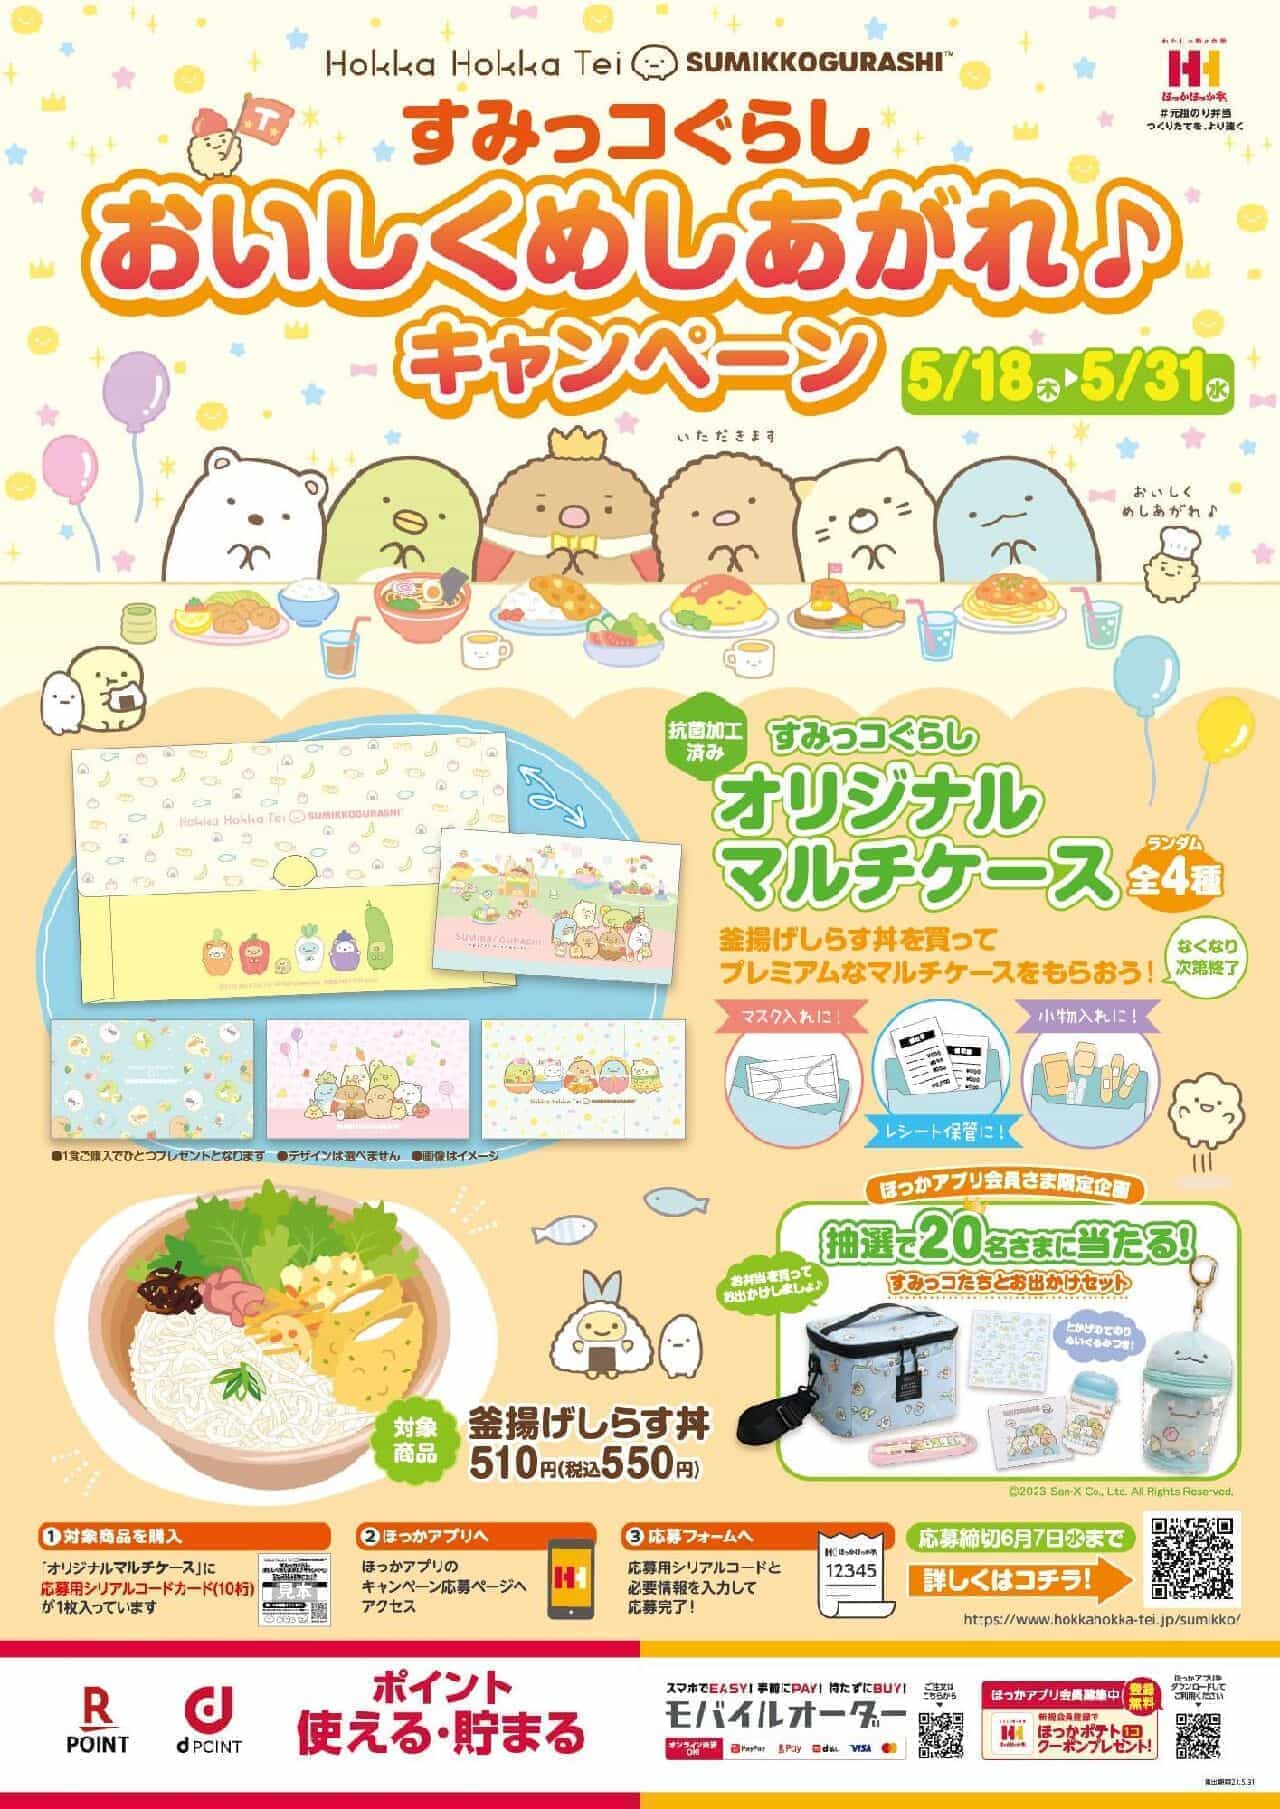 HOKKAHOKKA-TEI "Sumikko Gurashi: Deliciously Enjoy Your Meal" Campaign